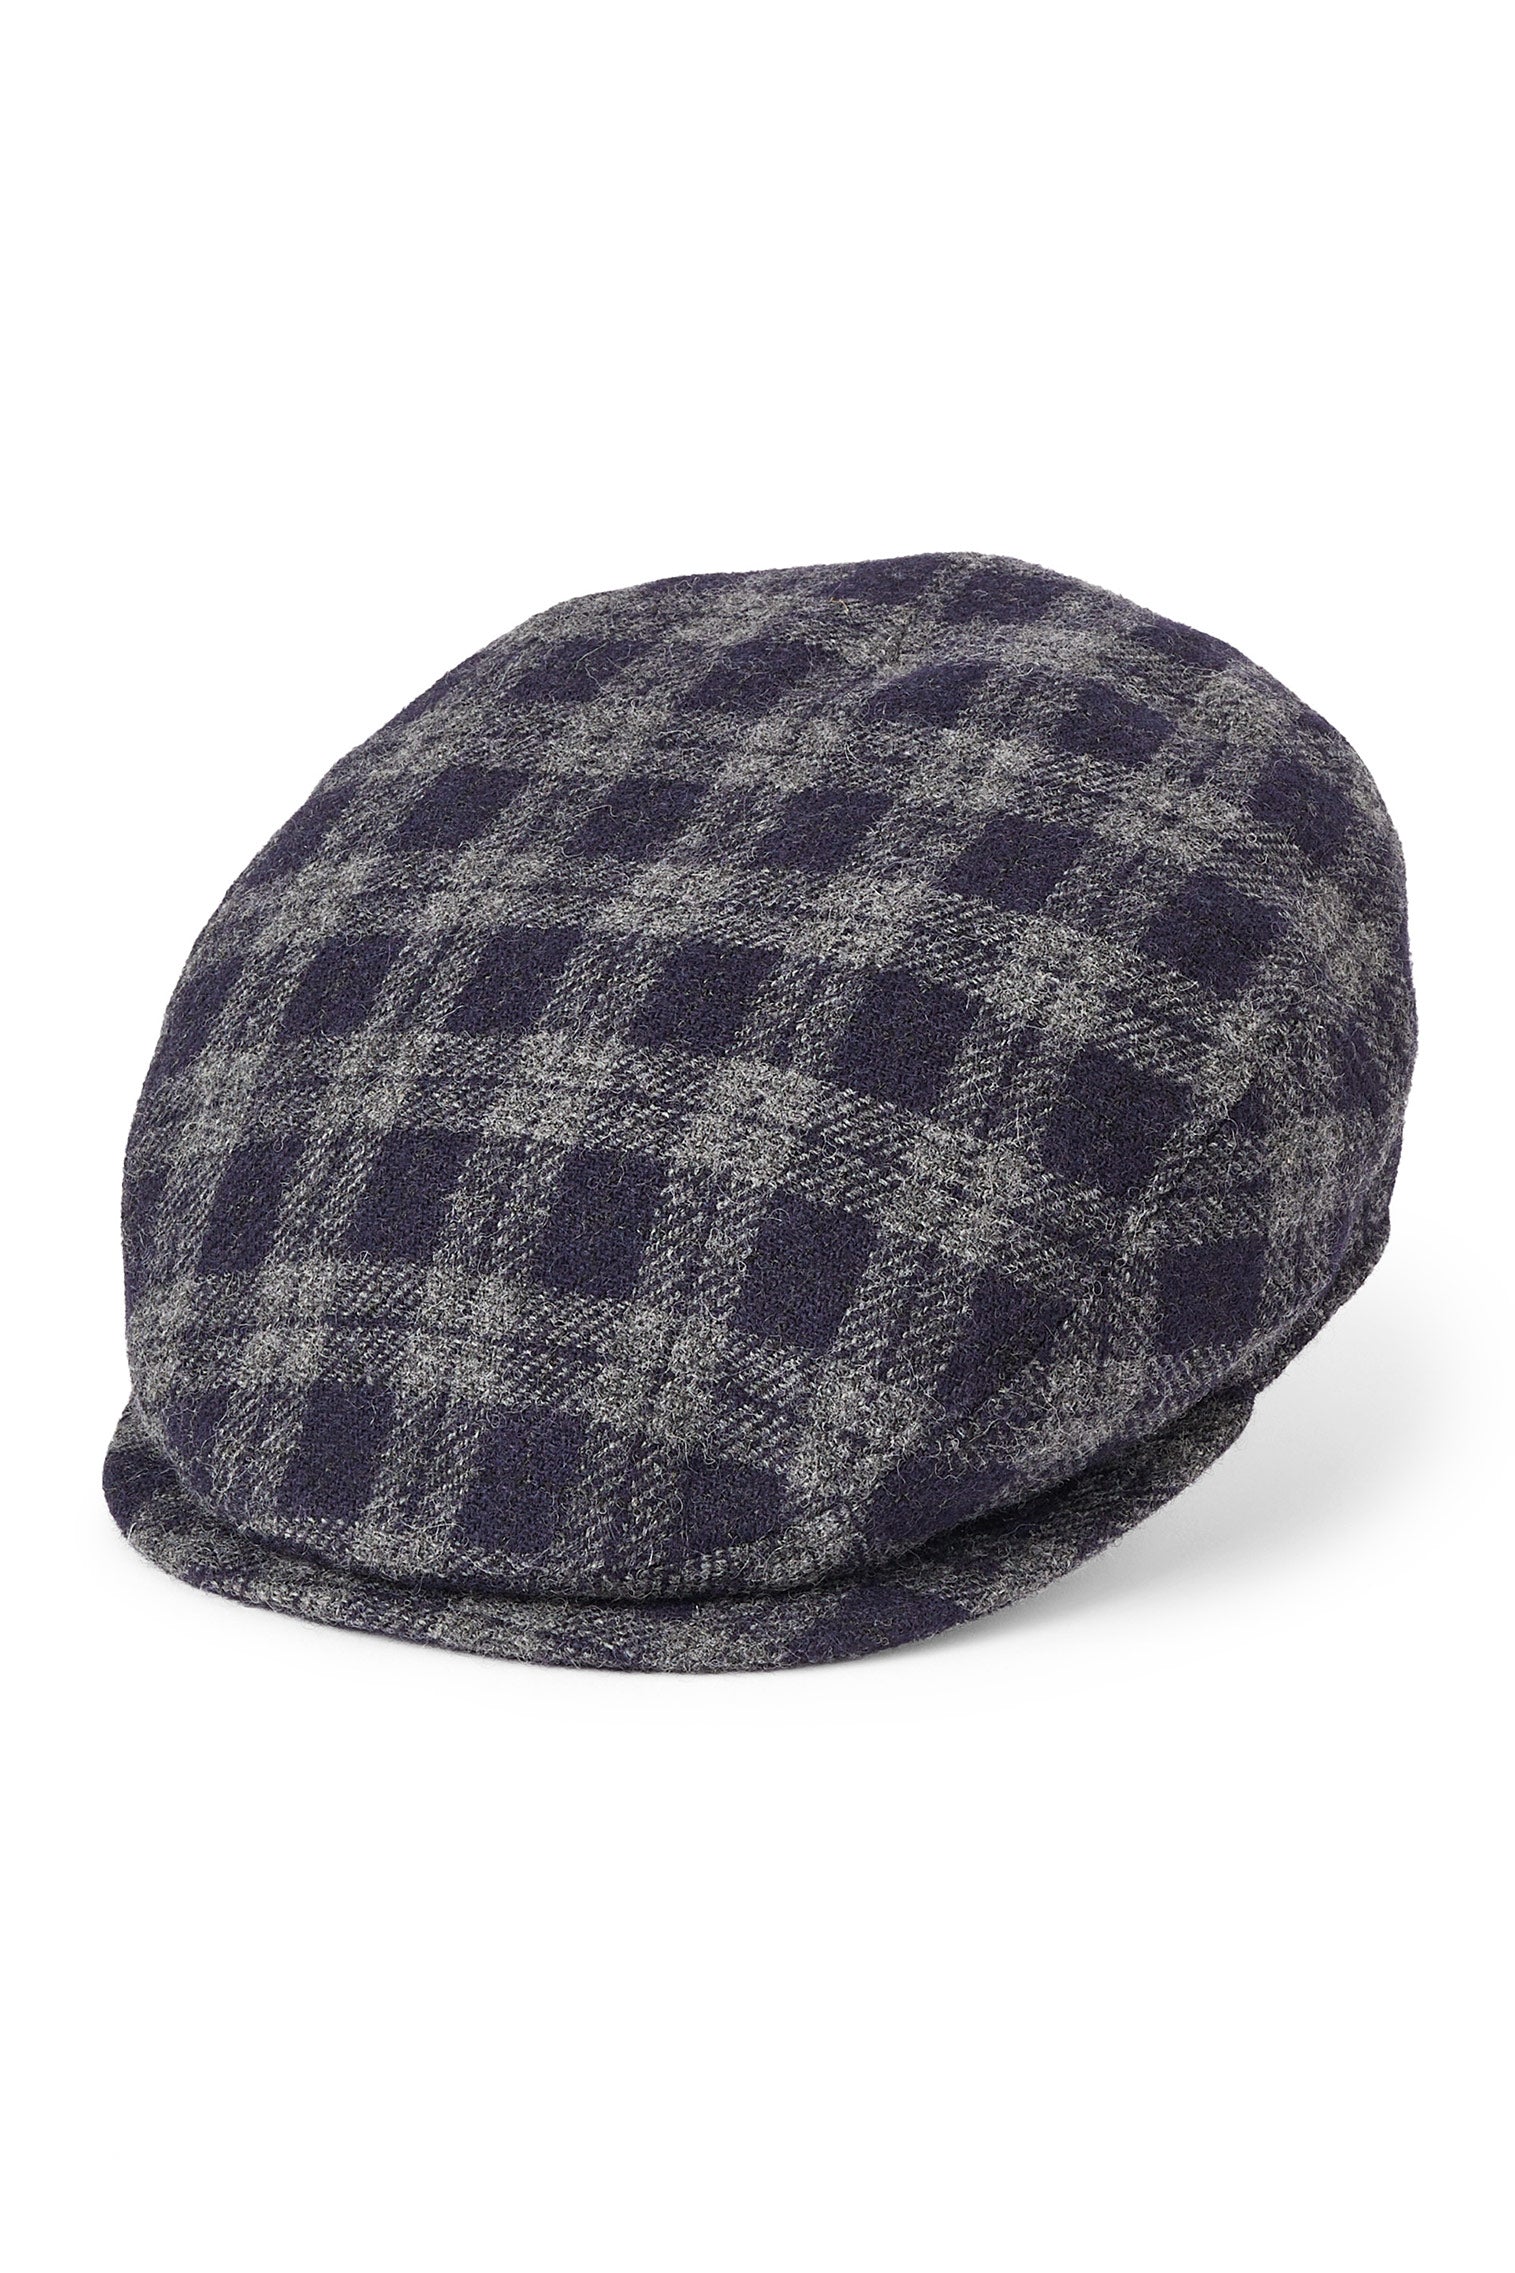 Darcy Navy Check Flat Cap - Men's Hats - Lock & Co. Hatters London UK